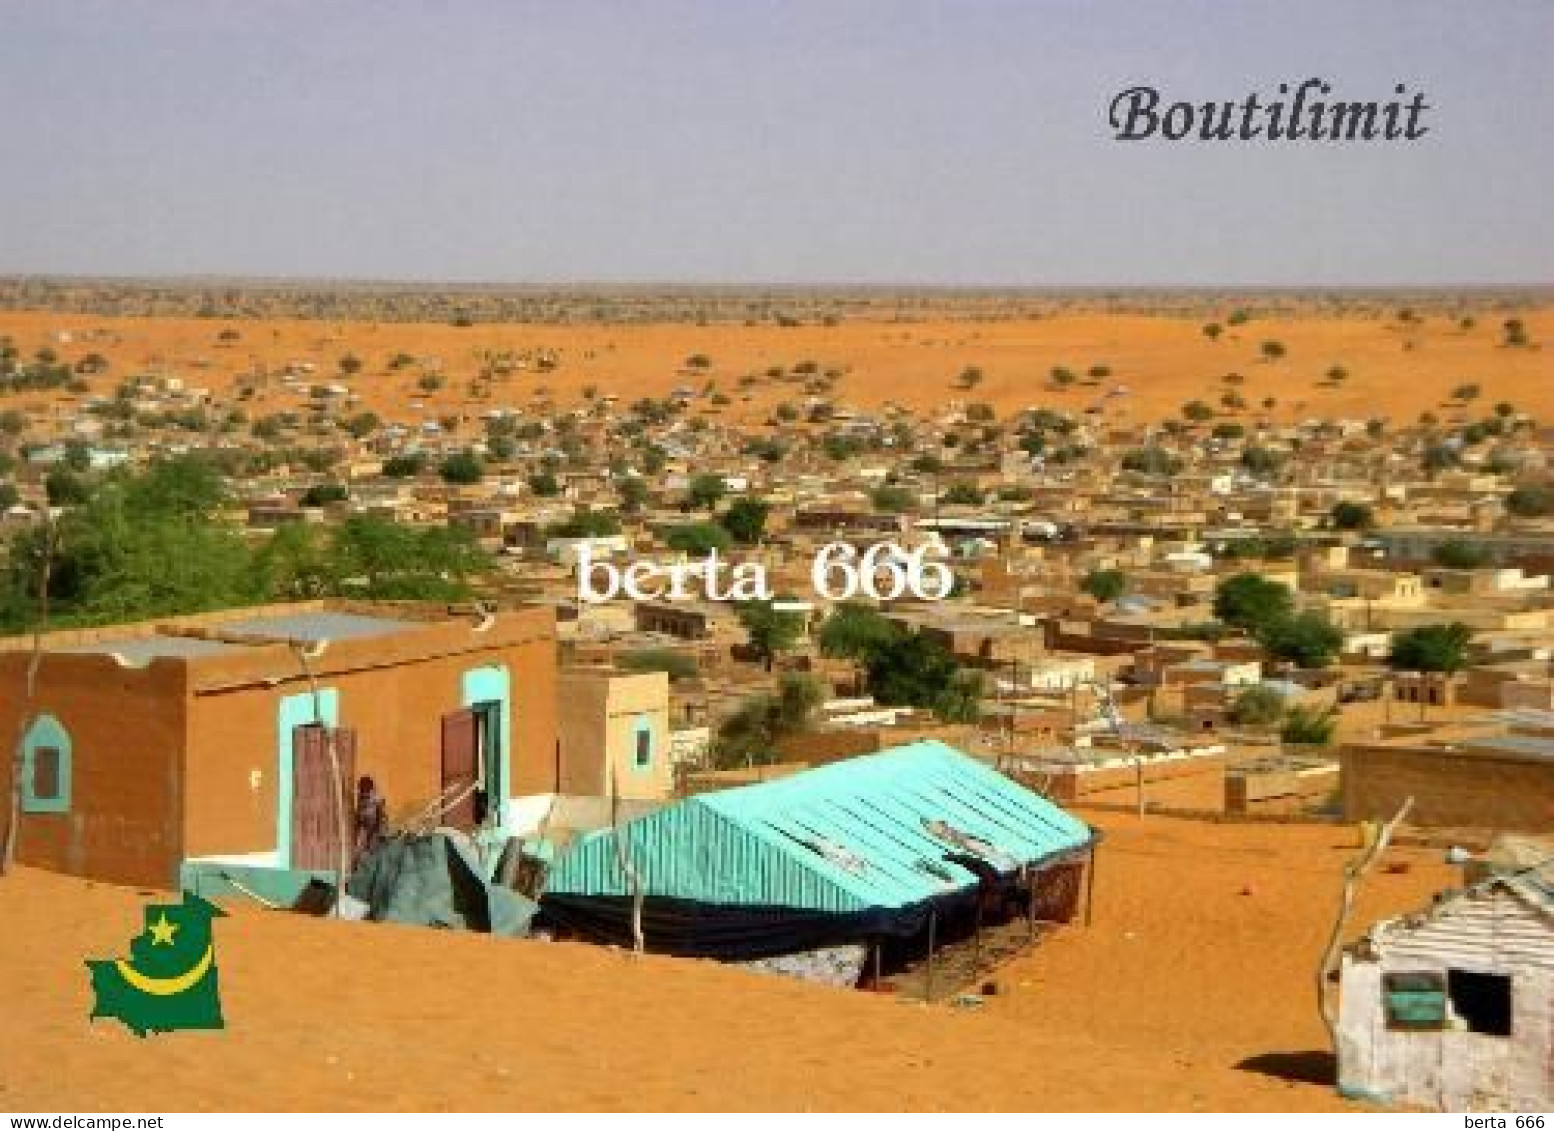 Mauritania Boutilimit View New Postcard - Mauritanië